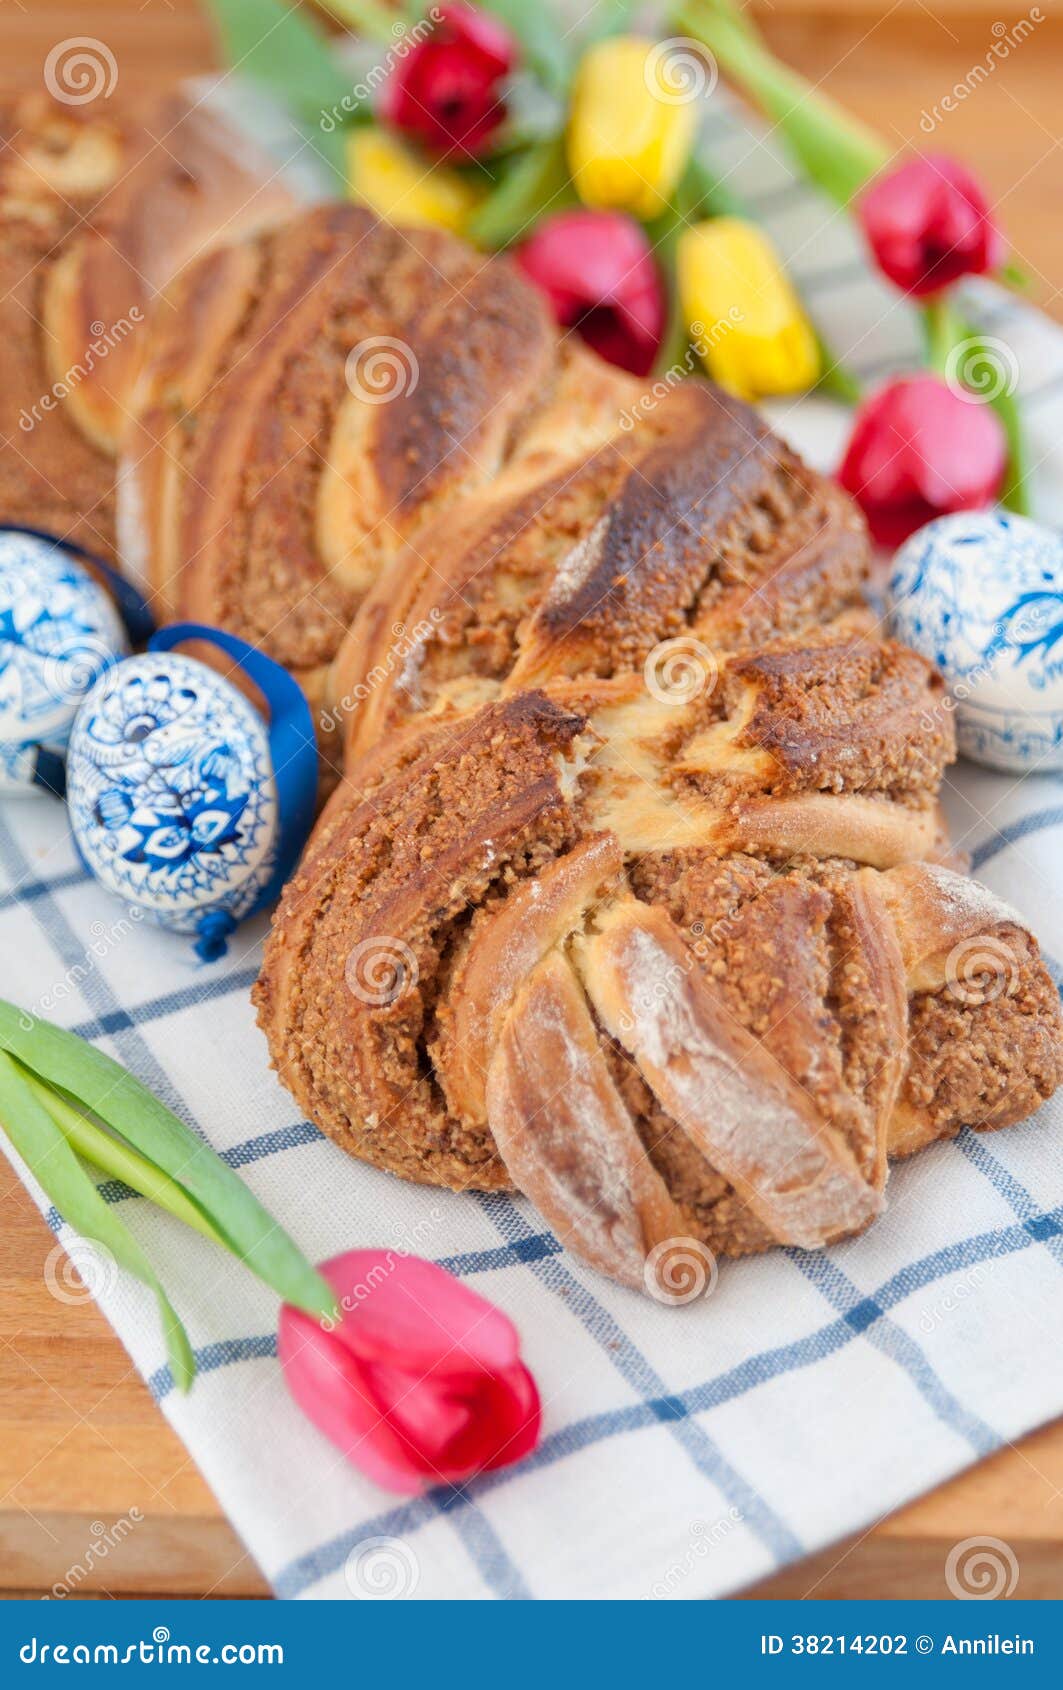 Sweet Braided German Easter Bread Stock Photo - Image of nutrition, breakfast: 38214202